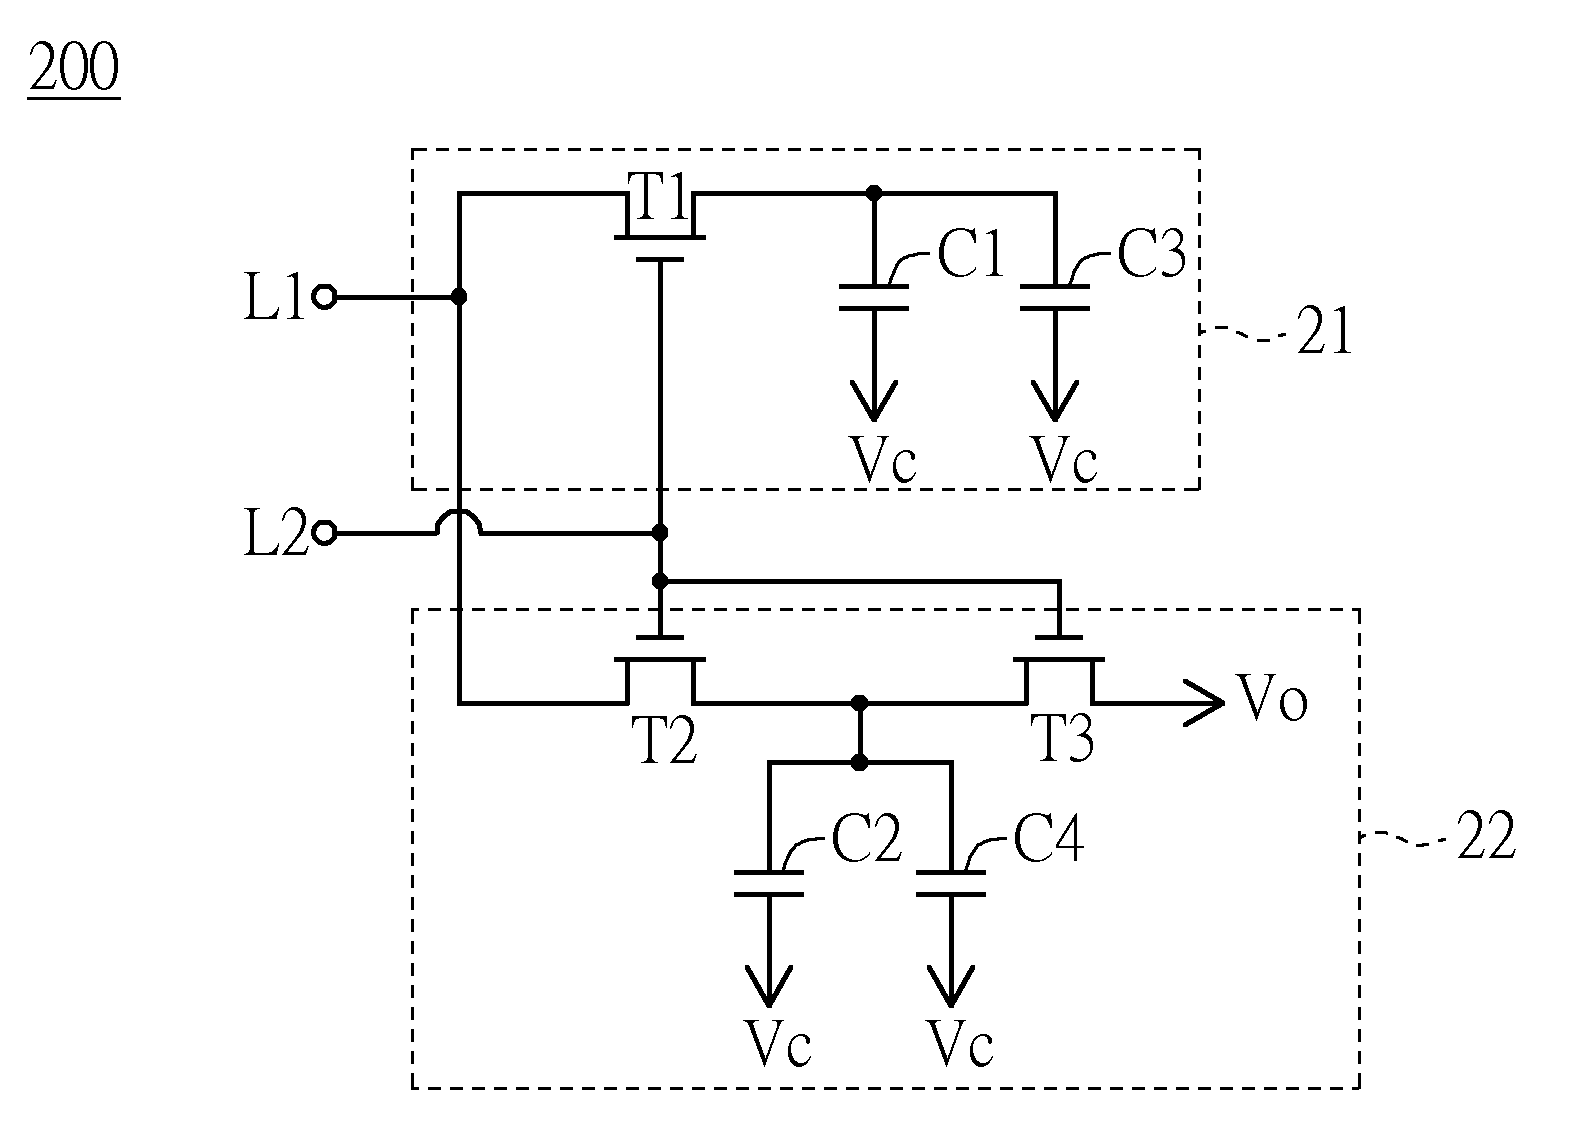 Pixel circuit structure